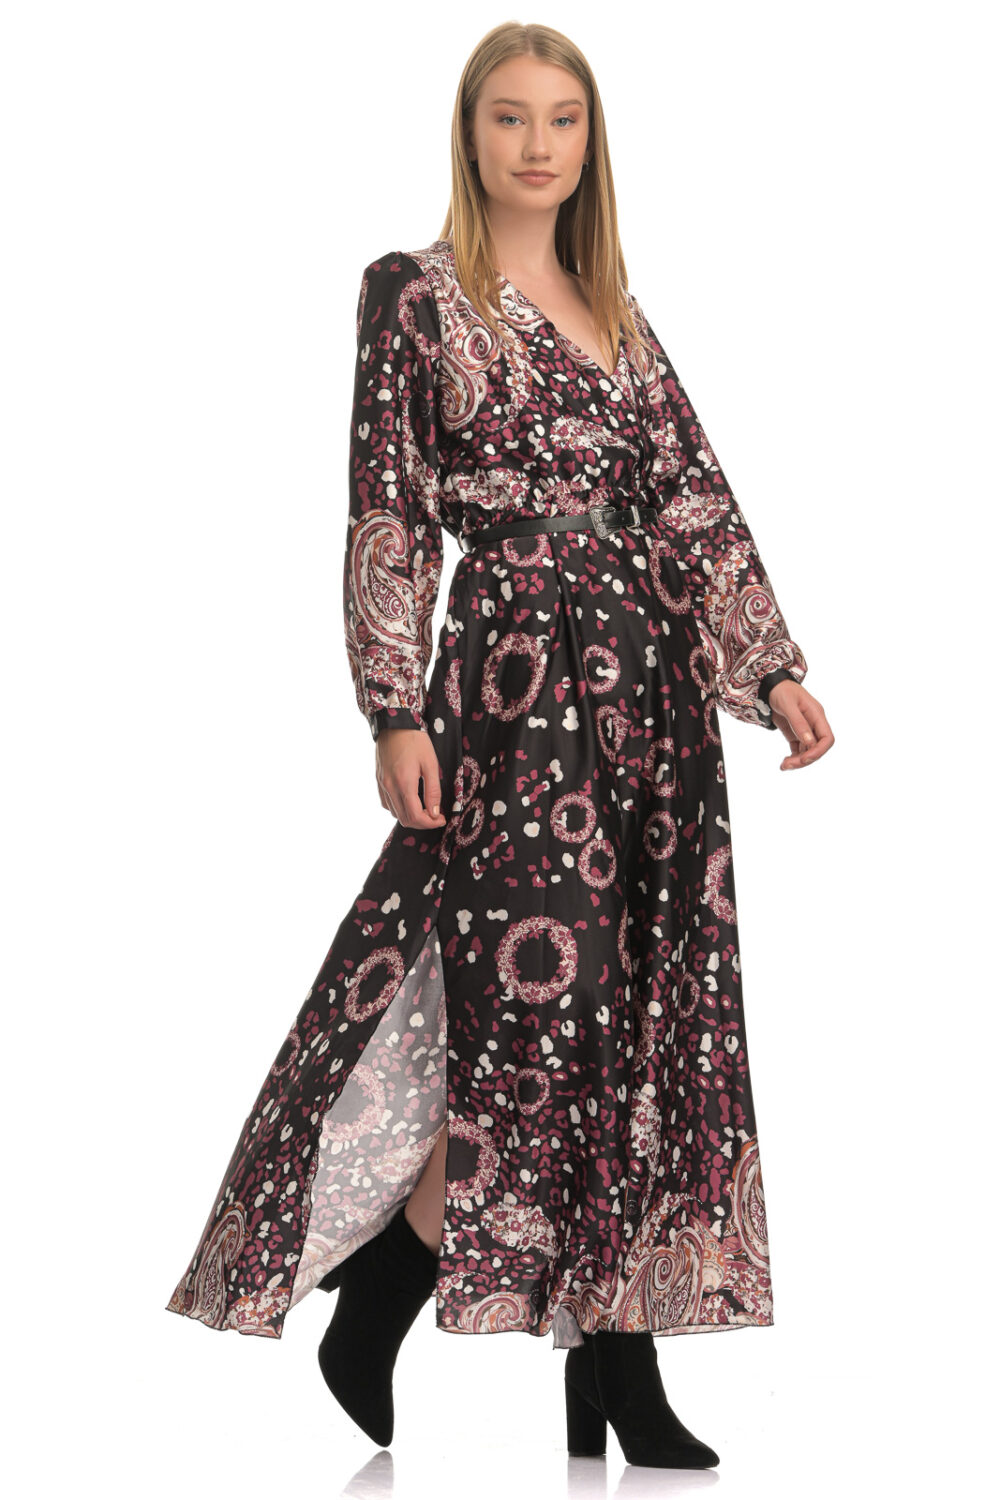 Black purple long dress with plaid pattern and belt